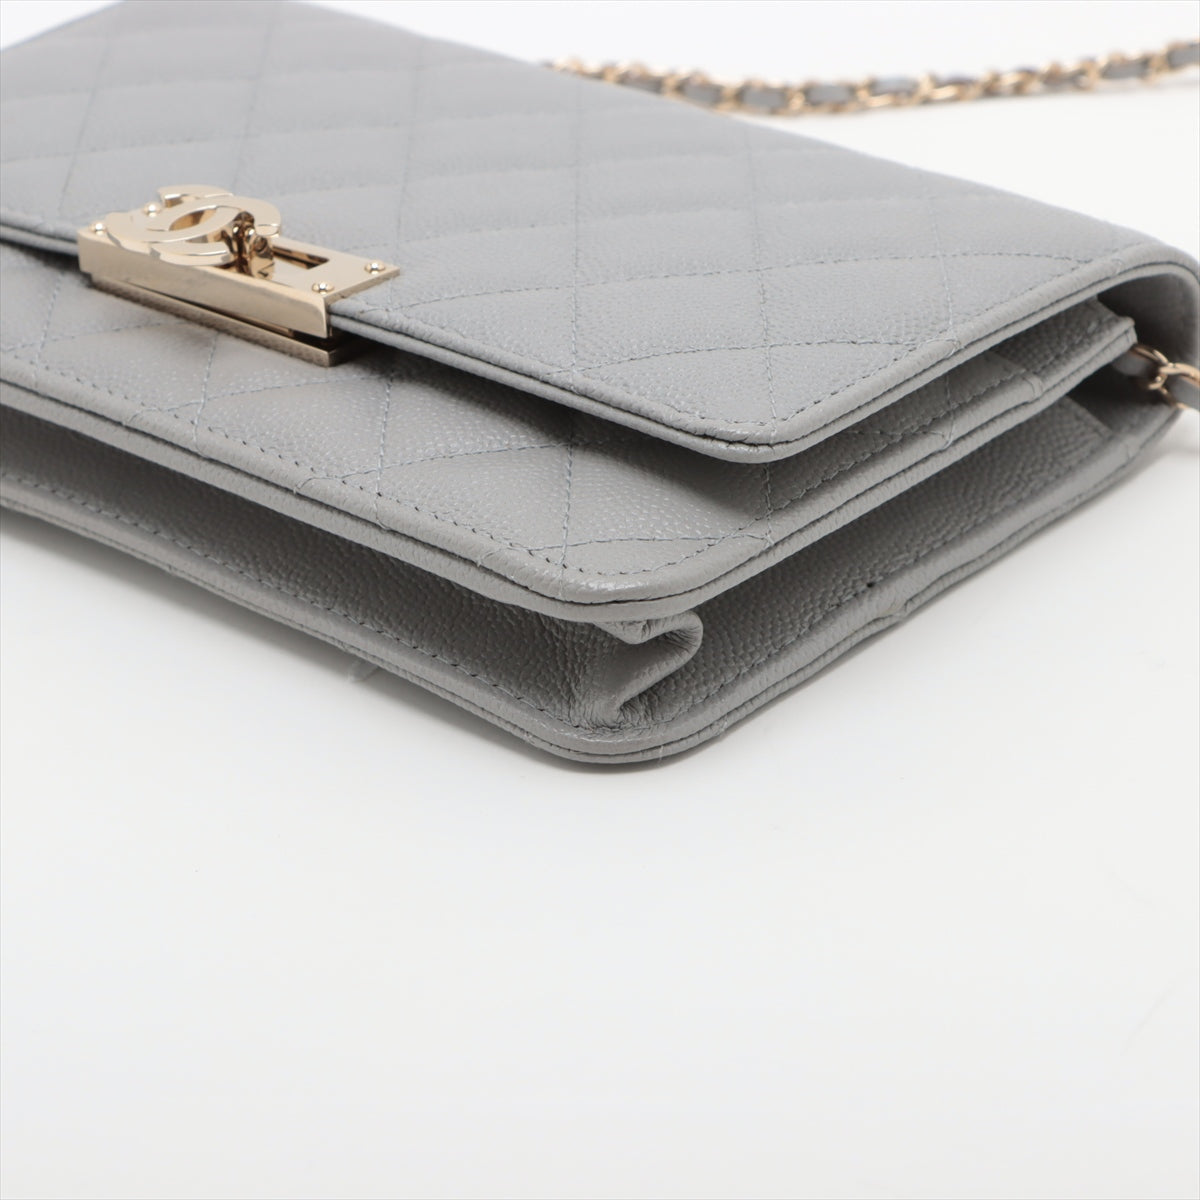 Chanel Matelasse Caviarskin Chain wallet Grey Gold Metal fittings 29th